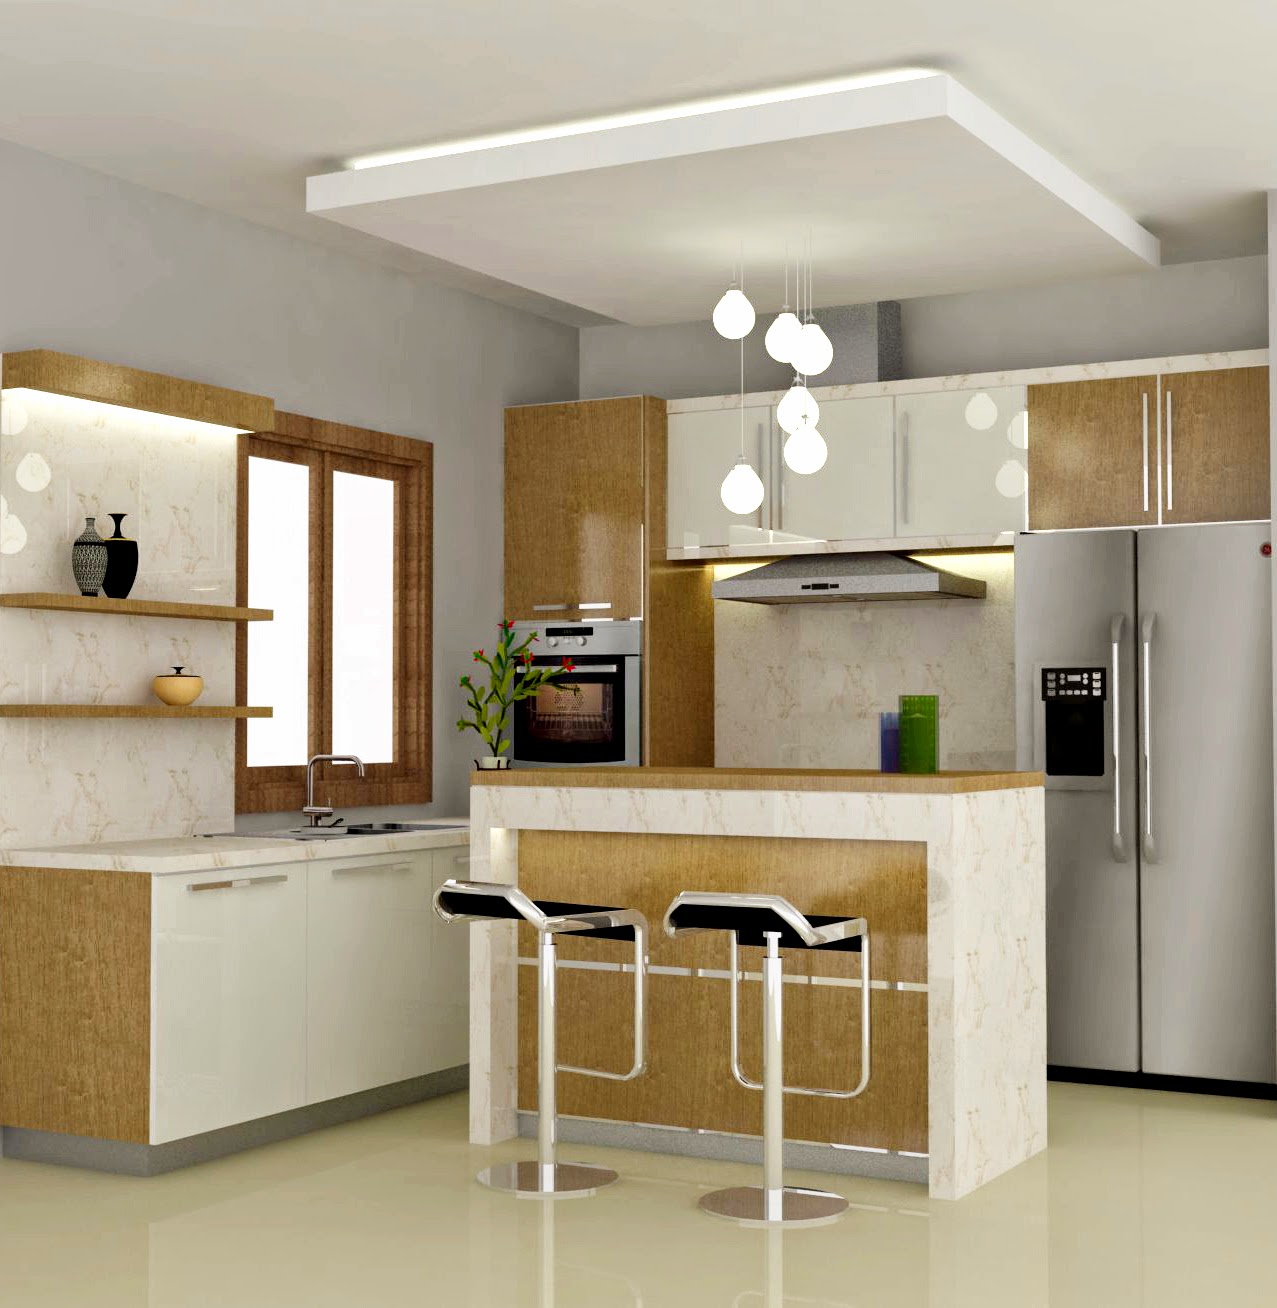  Desain  Interior  Dapur Rumah  Minimalis  Rumah  Minimalis  